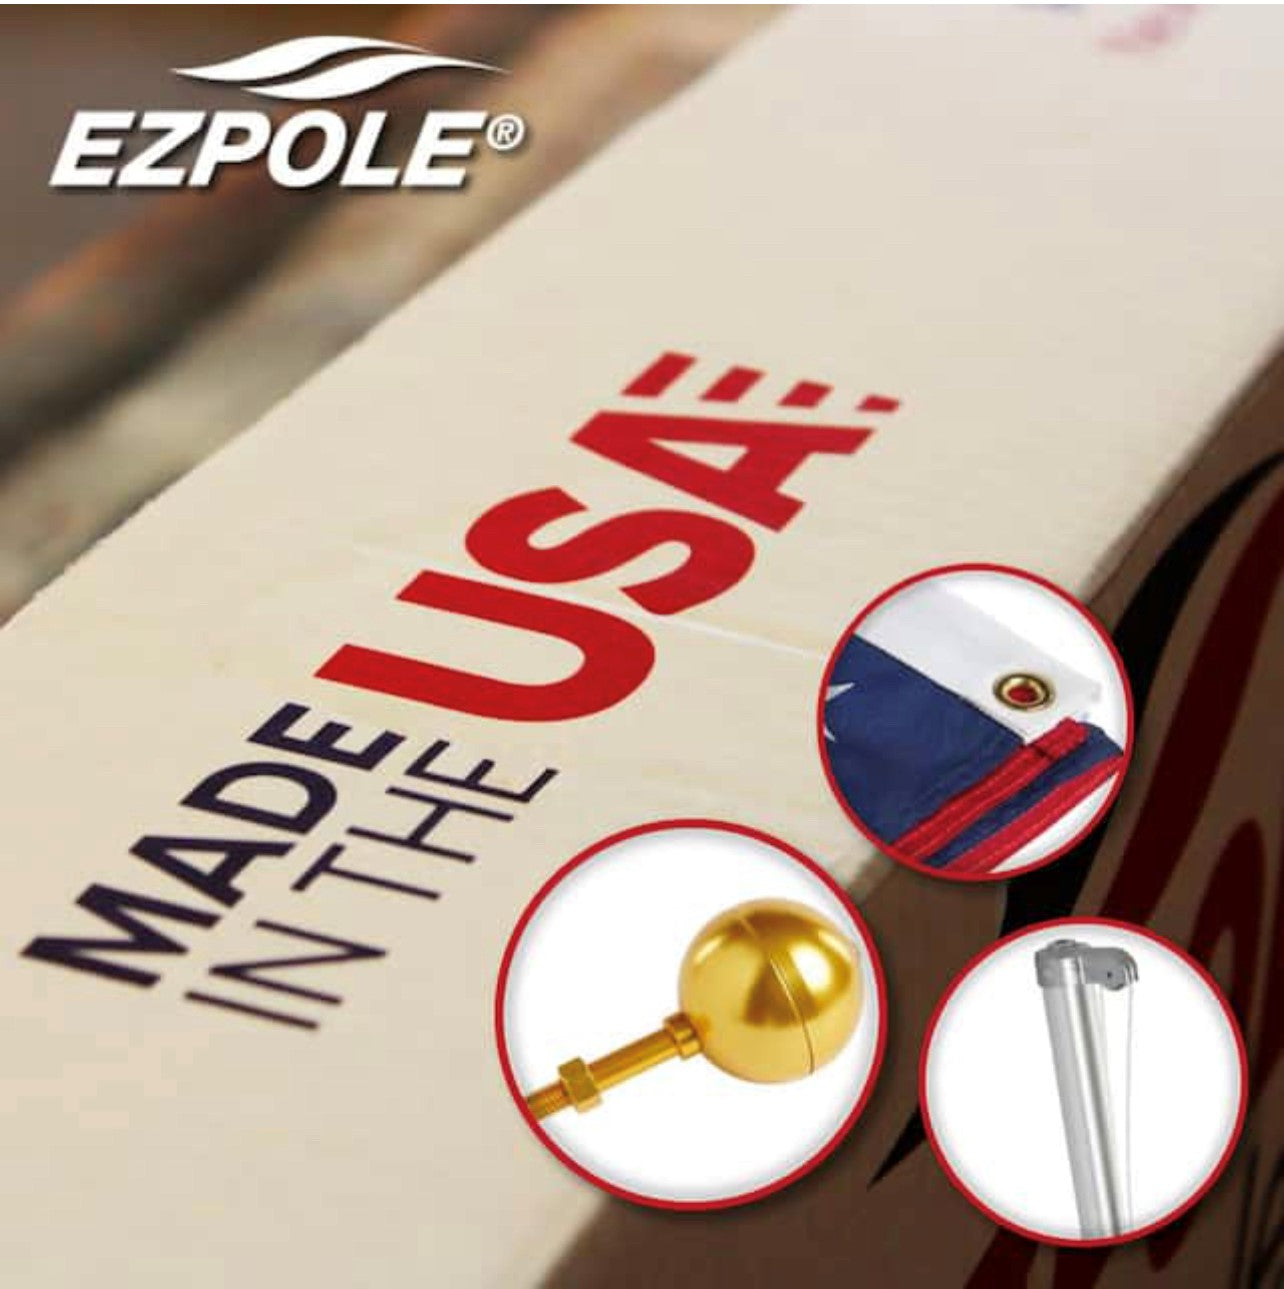 Classic Rope Flagpole – EZPOLE Flagpoles